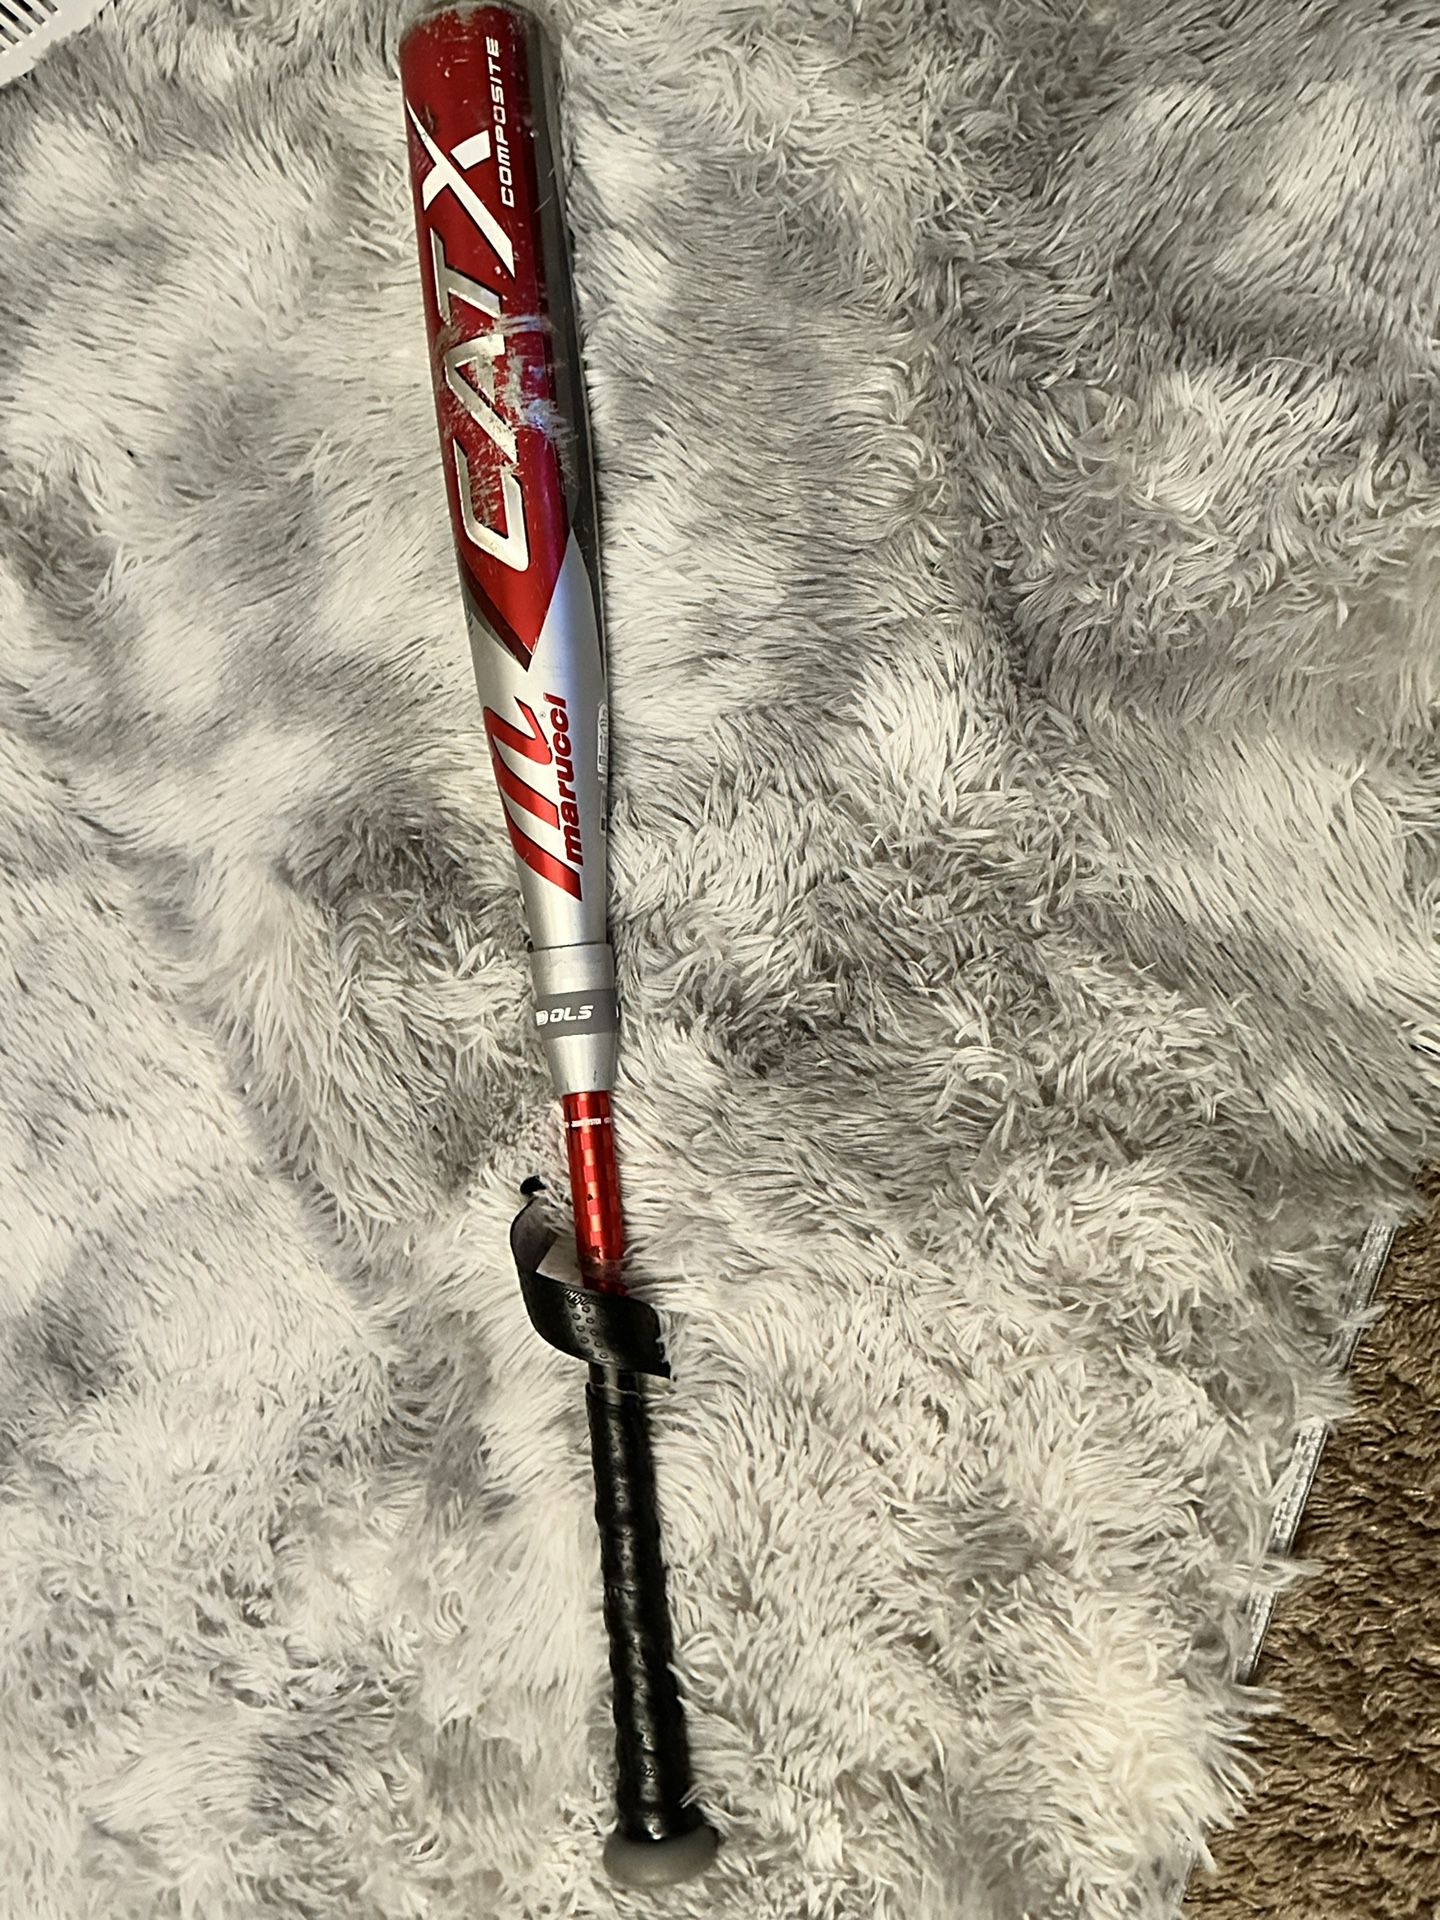 Cat X baseball bat drop 8 size 32